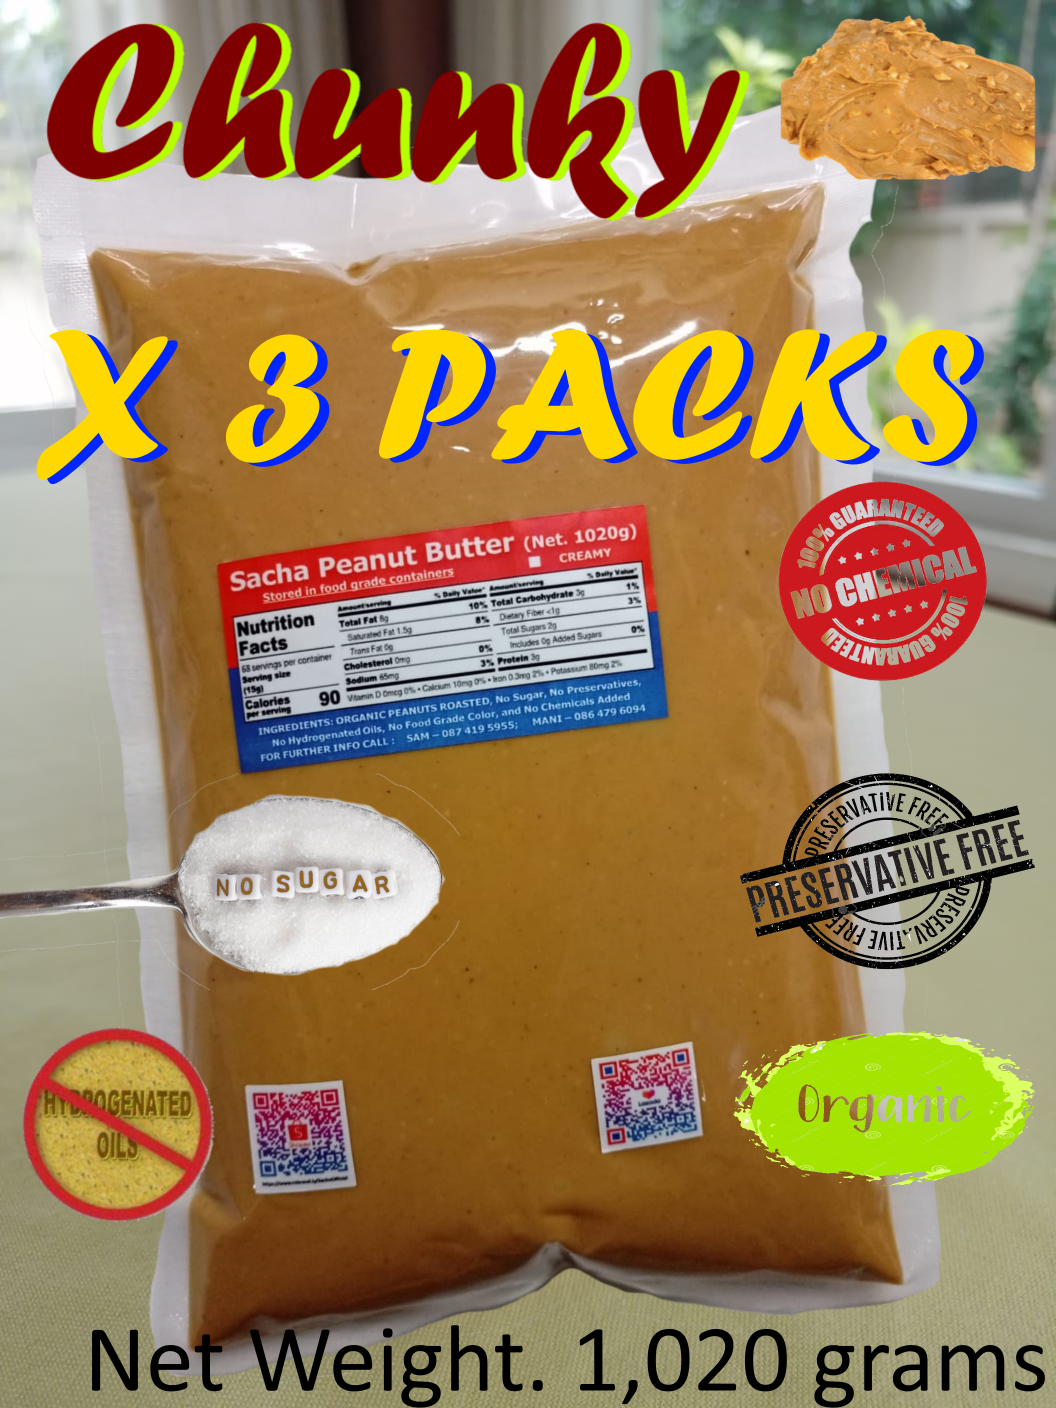 Sacha Peanut Butter (Chunky x 3 Packs) All Natural Organic (1,020 grams x 3 แพ็ค) - Free Delivery, ซาช่า-เนยถั่ว (ส่งฟรี)